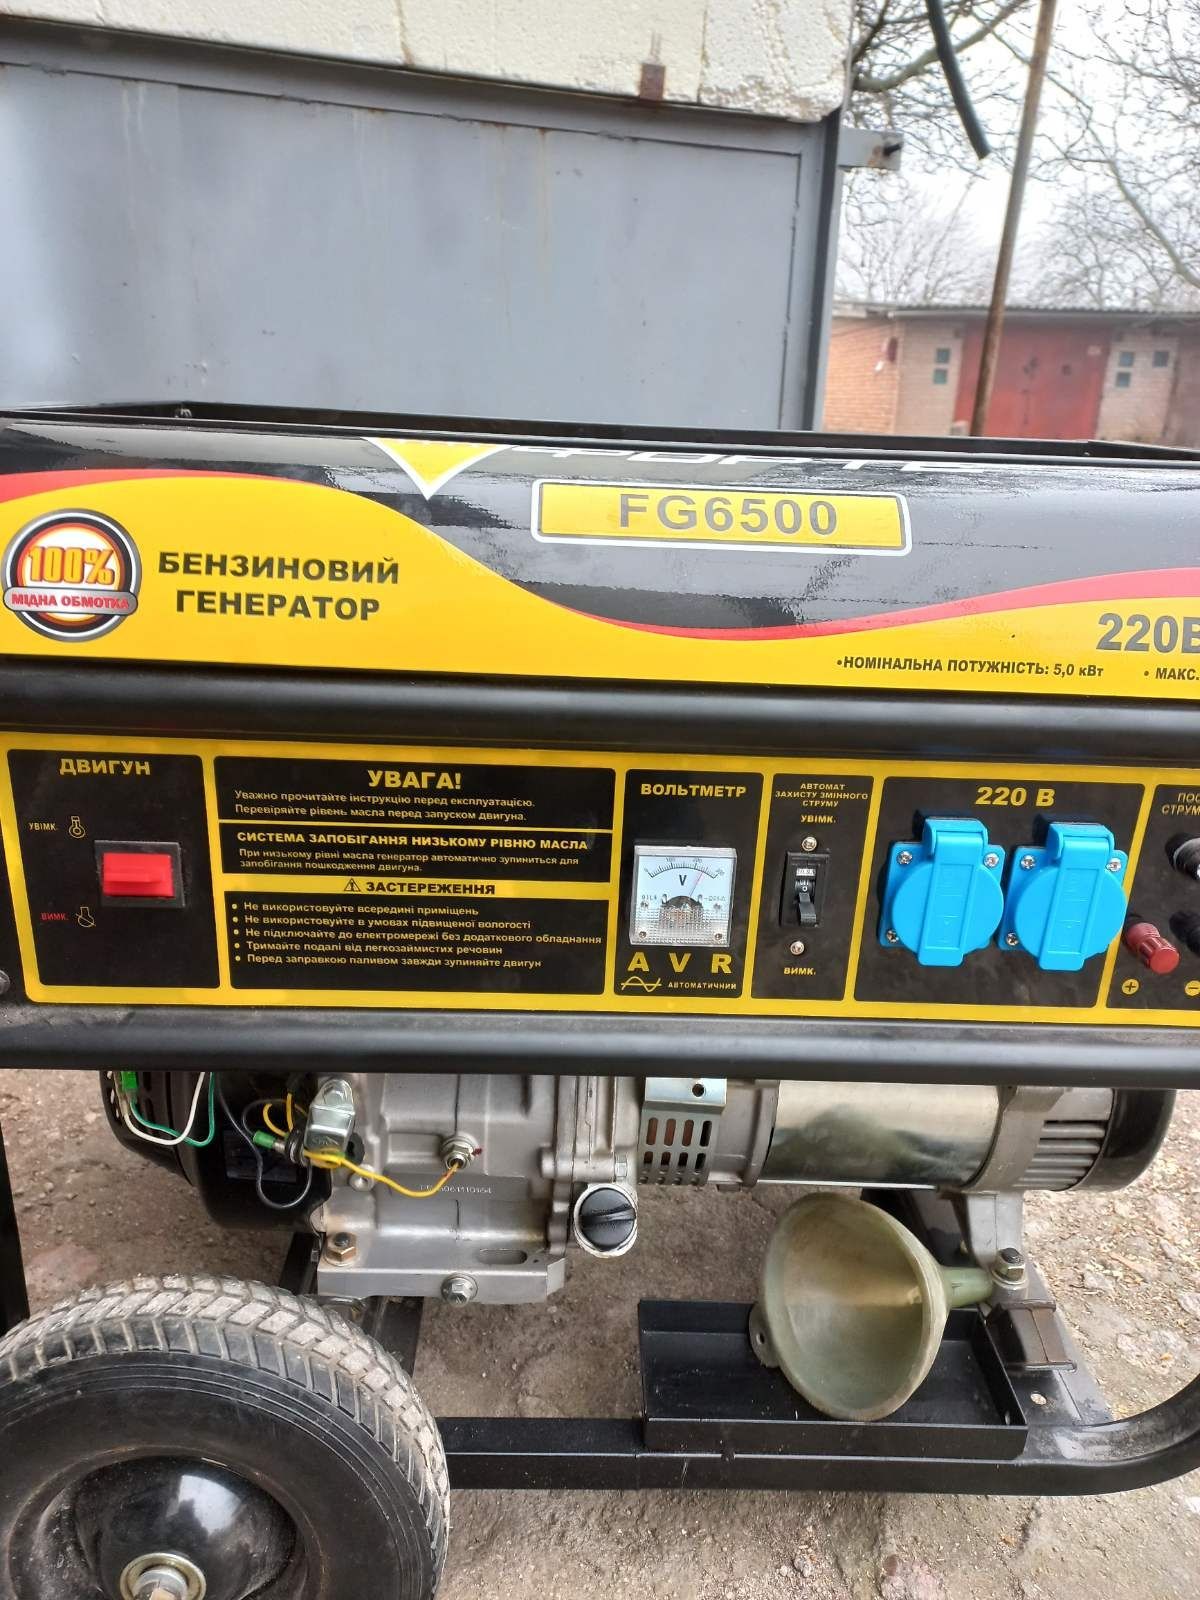 Бензиновий  генератор FG6500

220B / 50Гц

FG6500